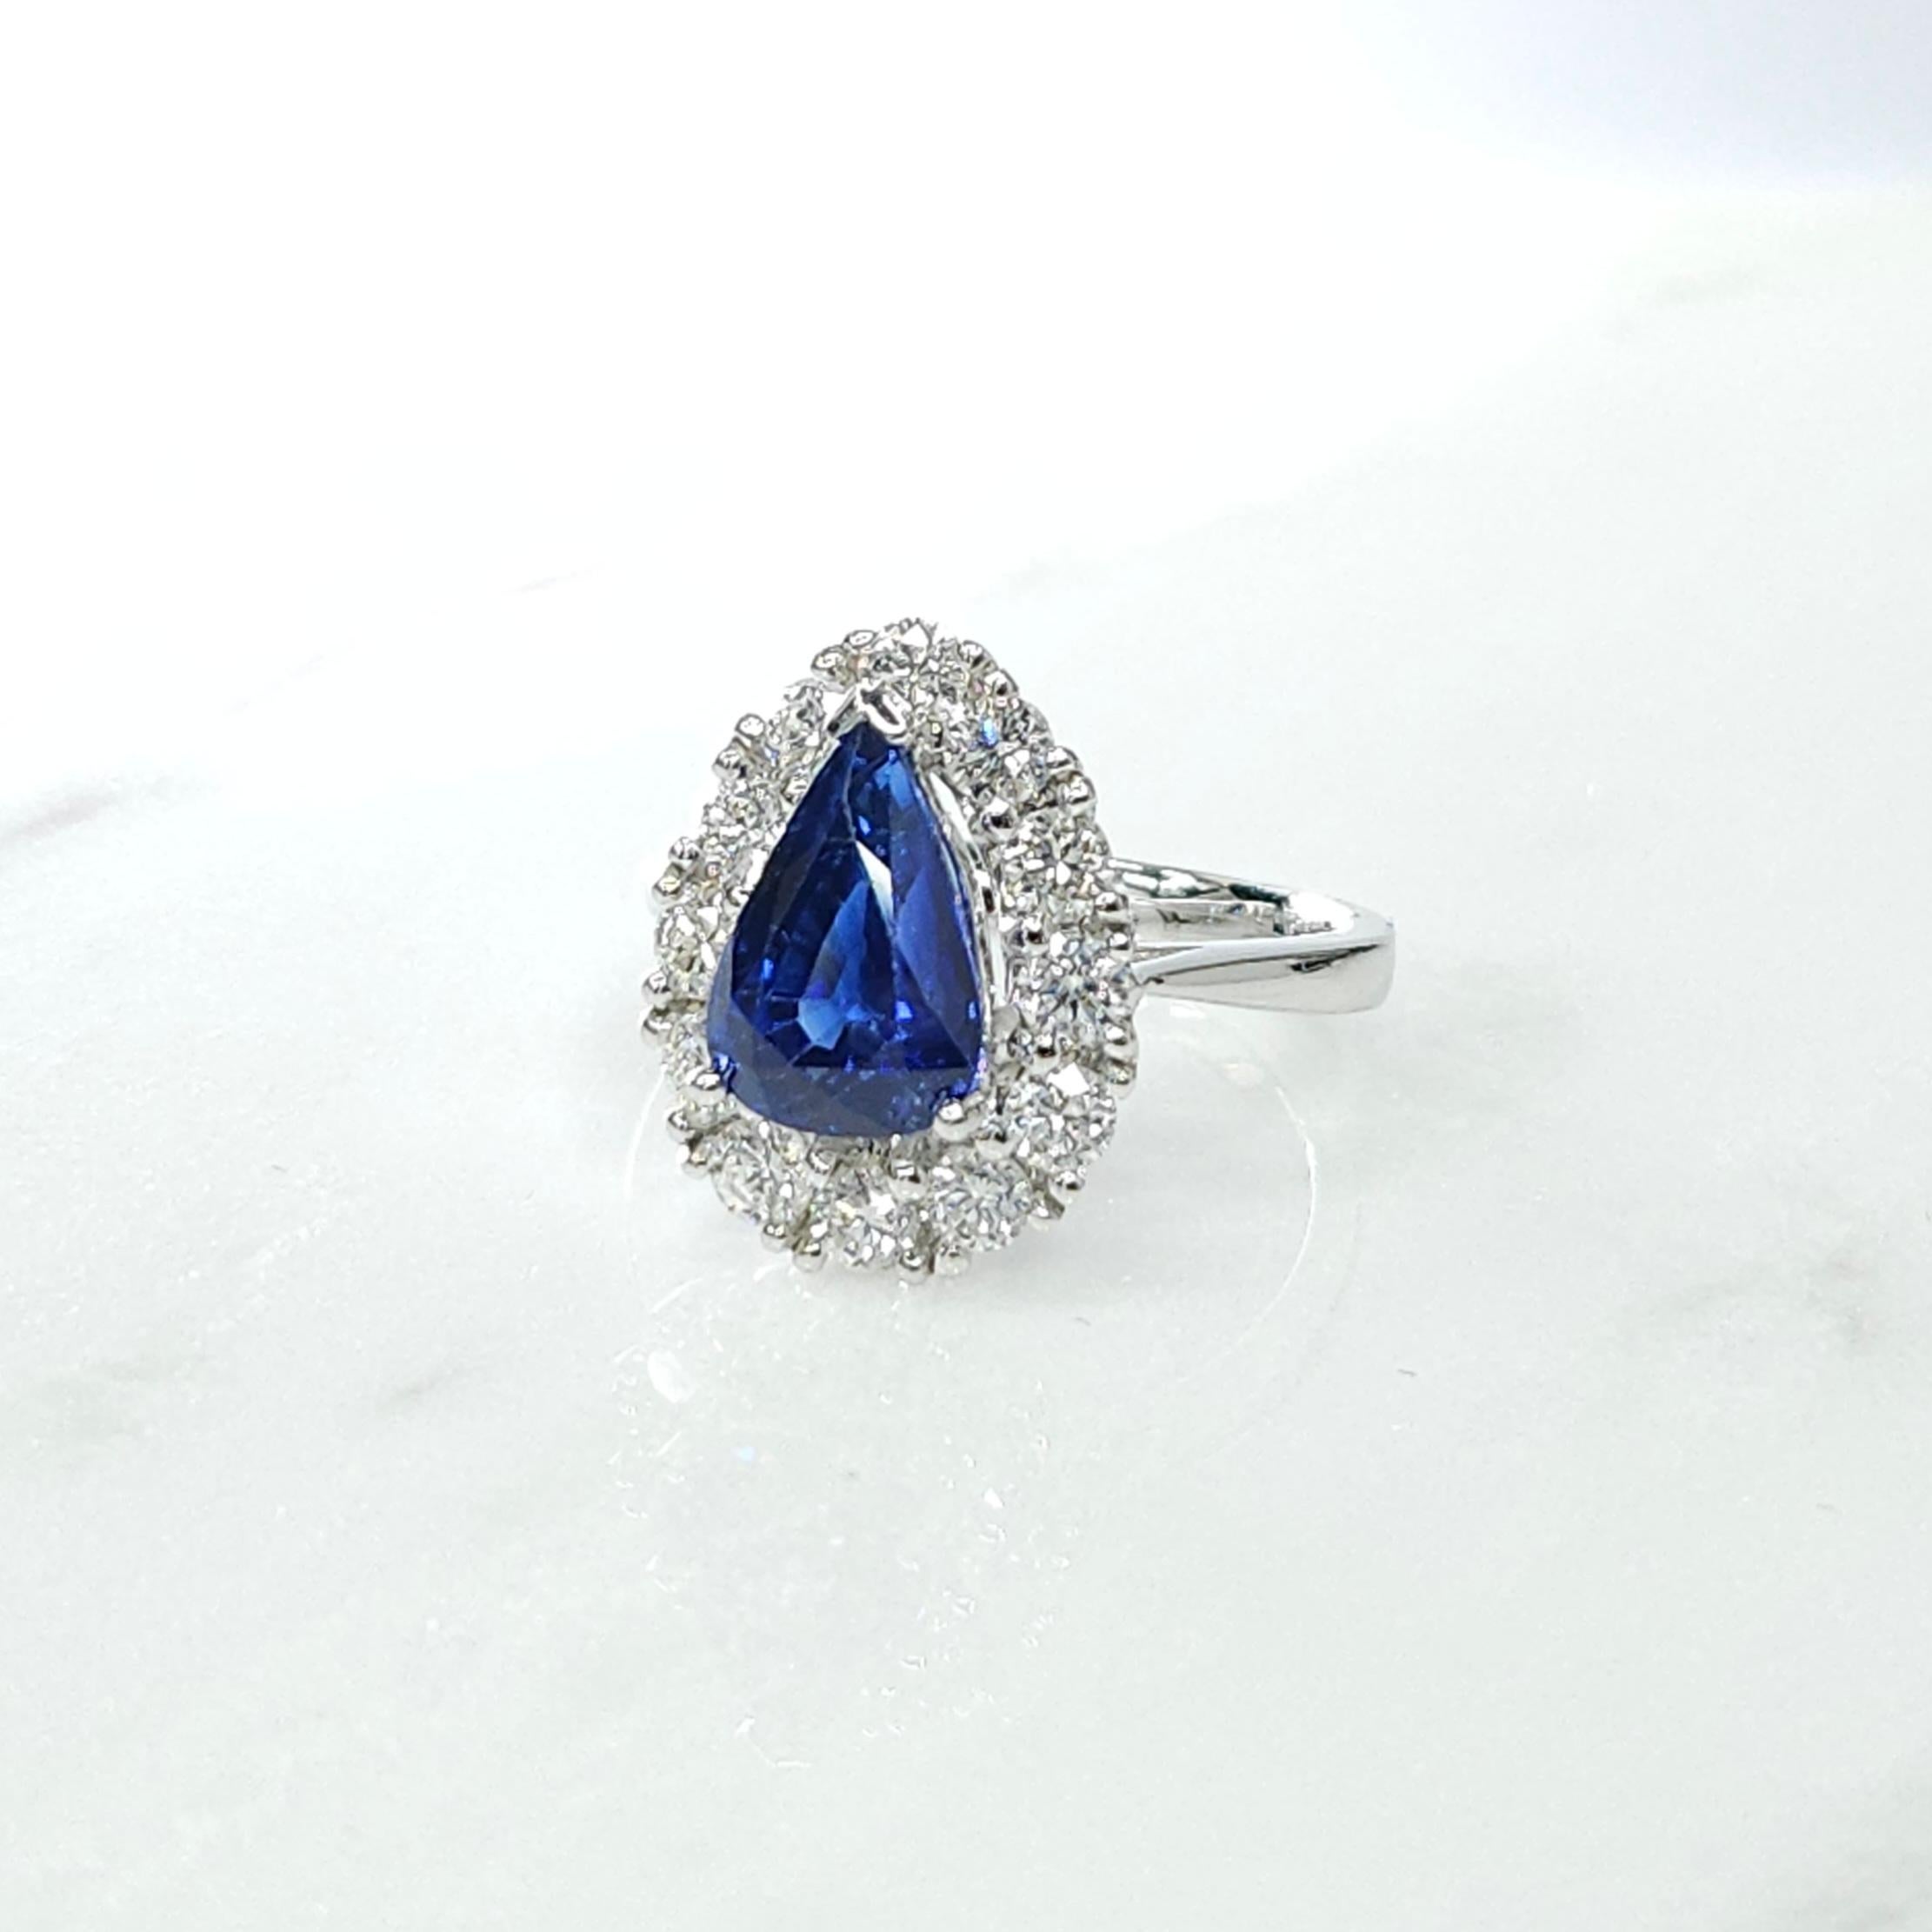 Pear Cut IGI Certified 3.08 Carat Blue Sapphire & Diamond Ring in 18K White Gold For Sale